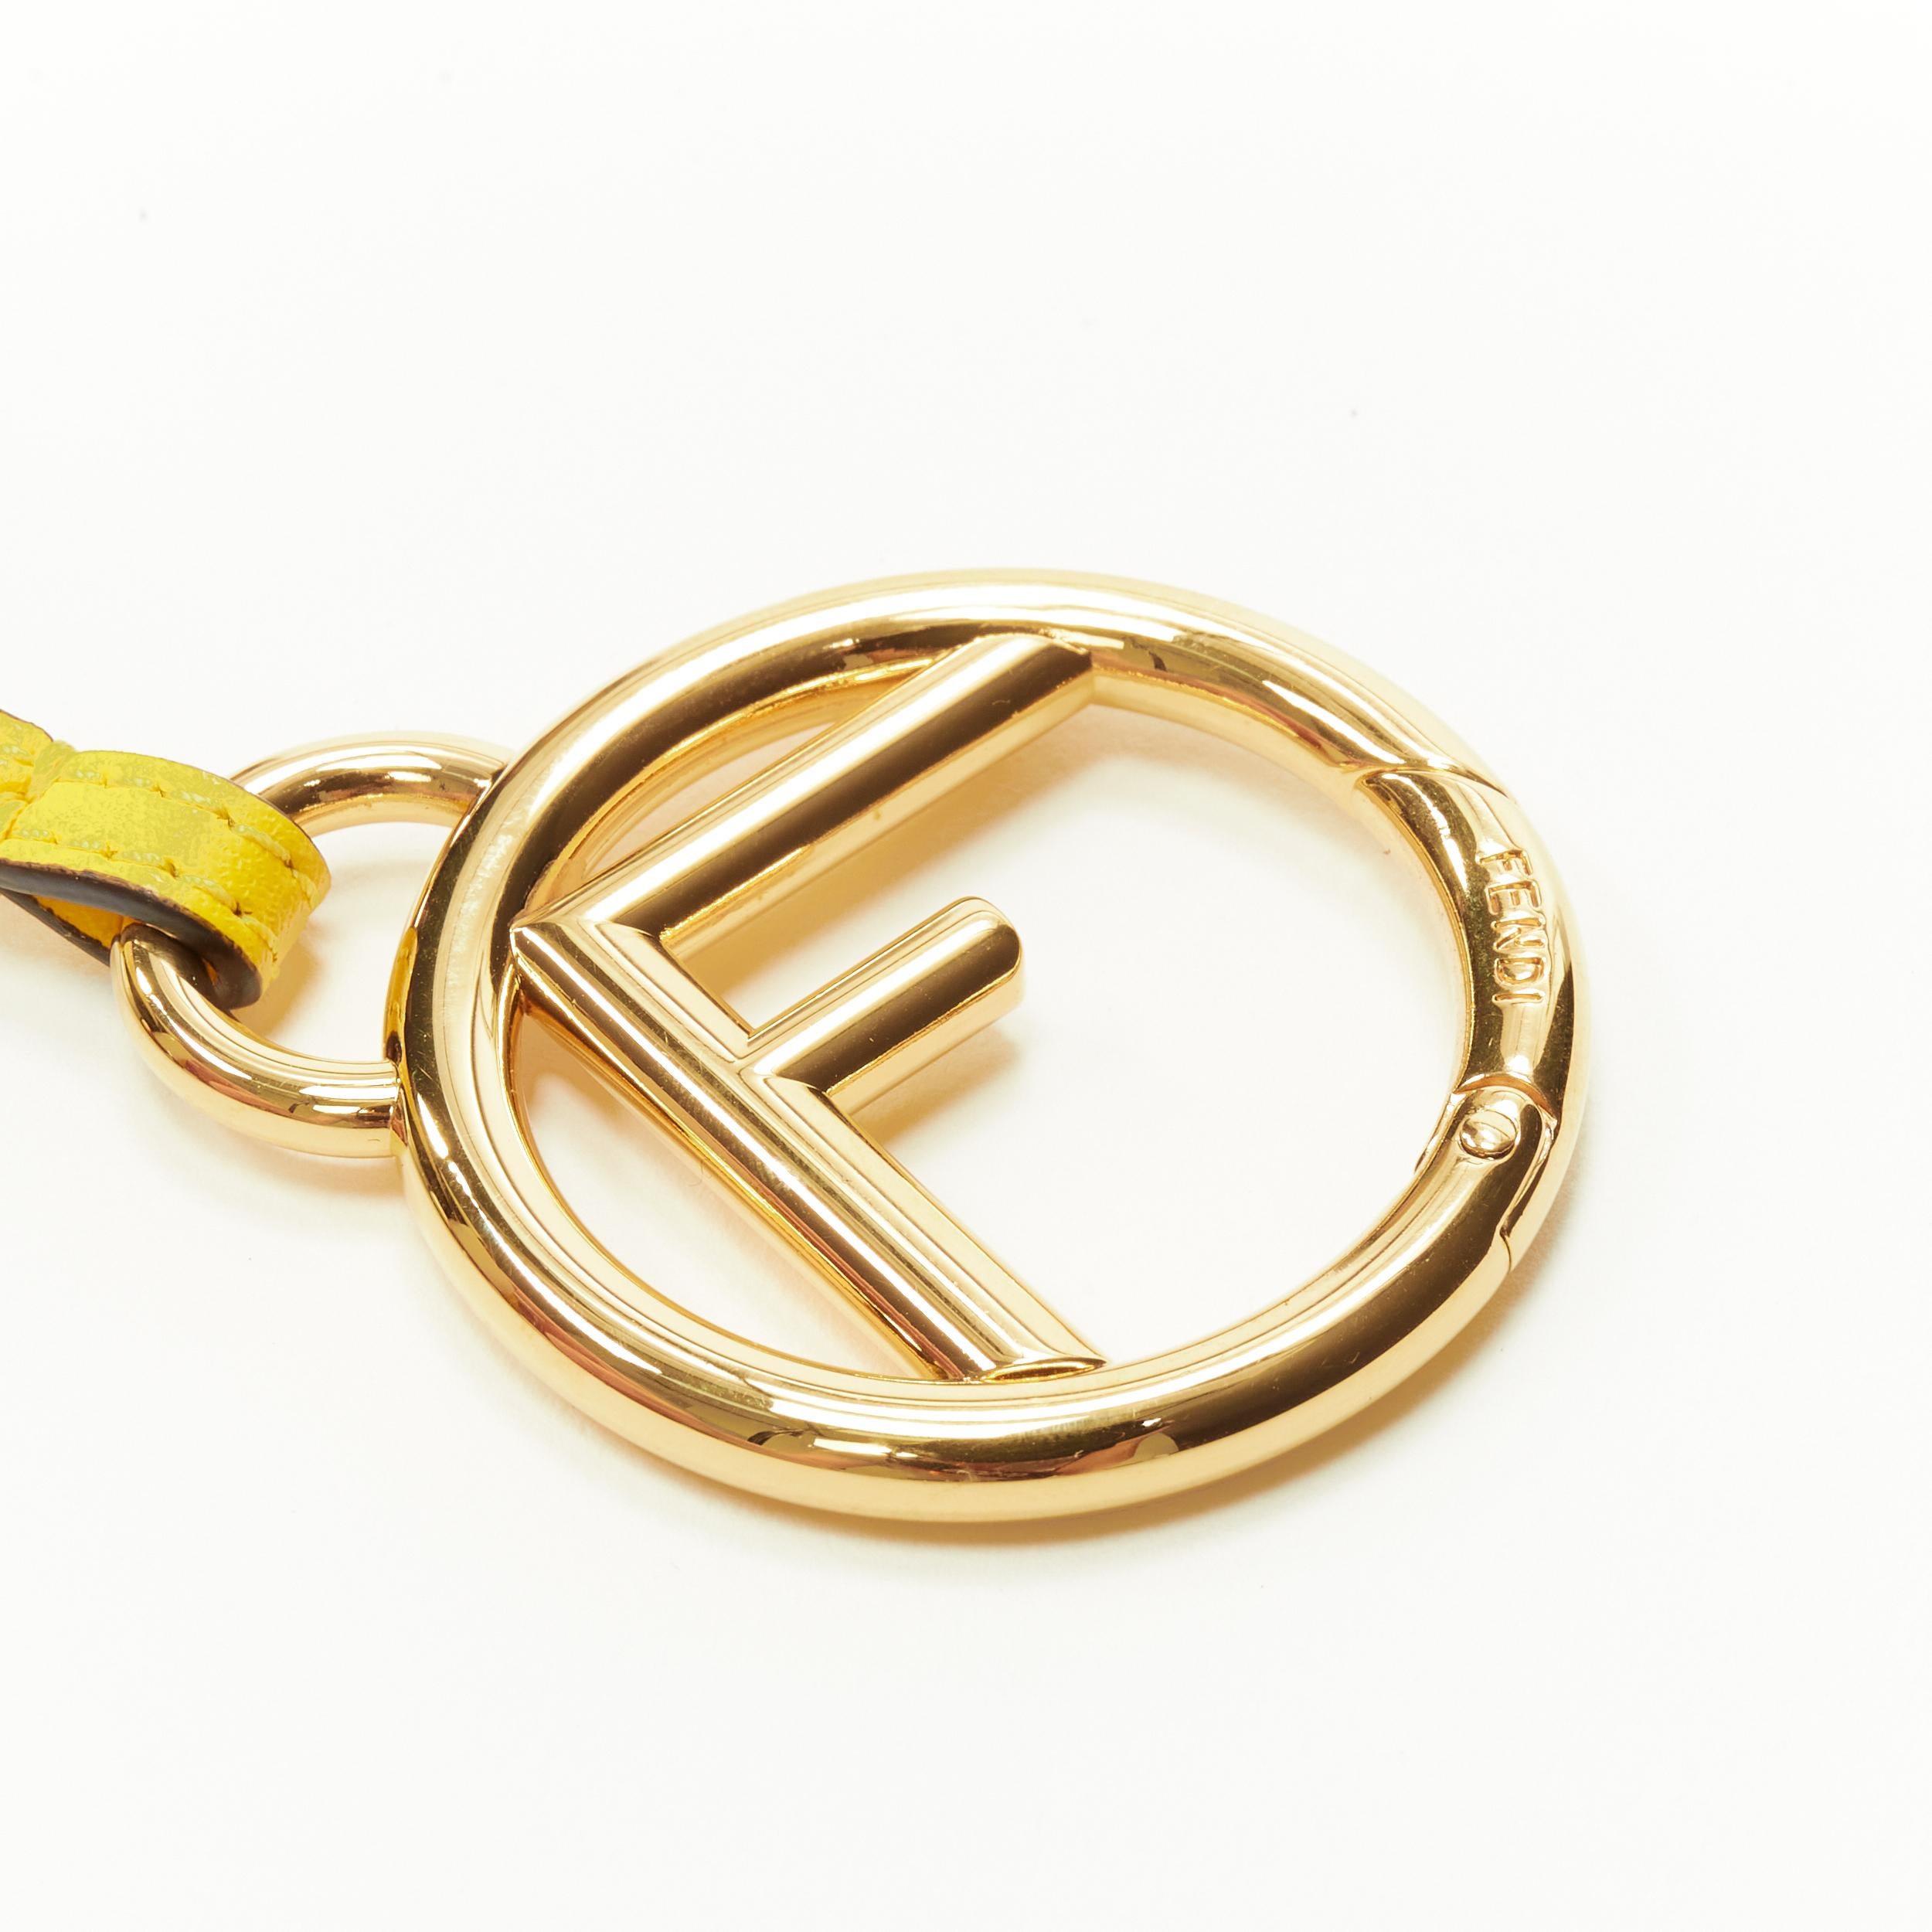 Women's rare FENDI Zucca GG monogra yellow pealed back banana gold F key ring bag charm